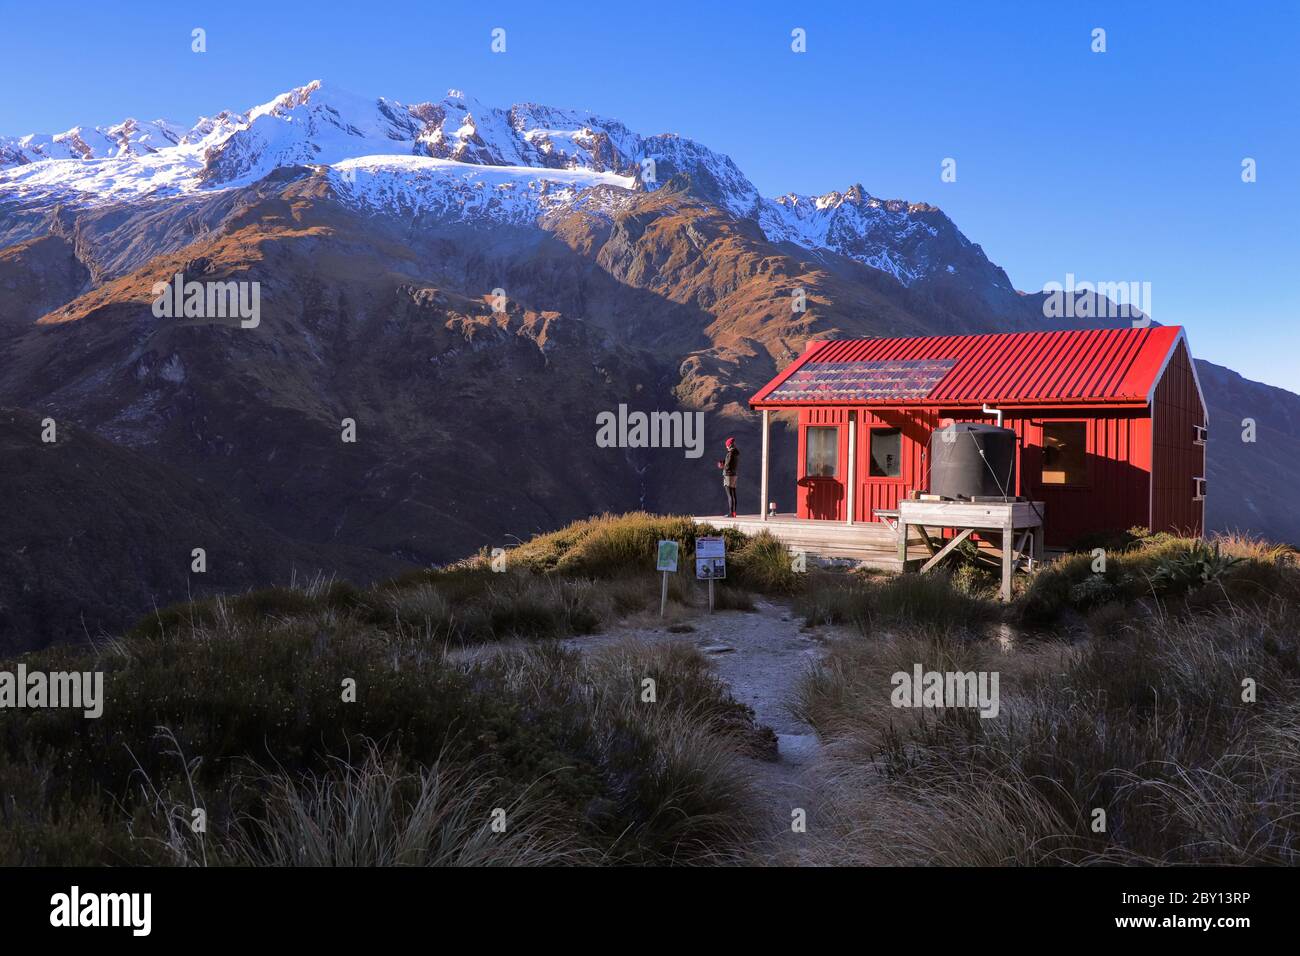 Liverpool Hut in the Matukituki Valley in Mt. Aspiring National Park, hiking trail, New Zealand. Stock Photo